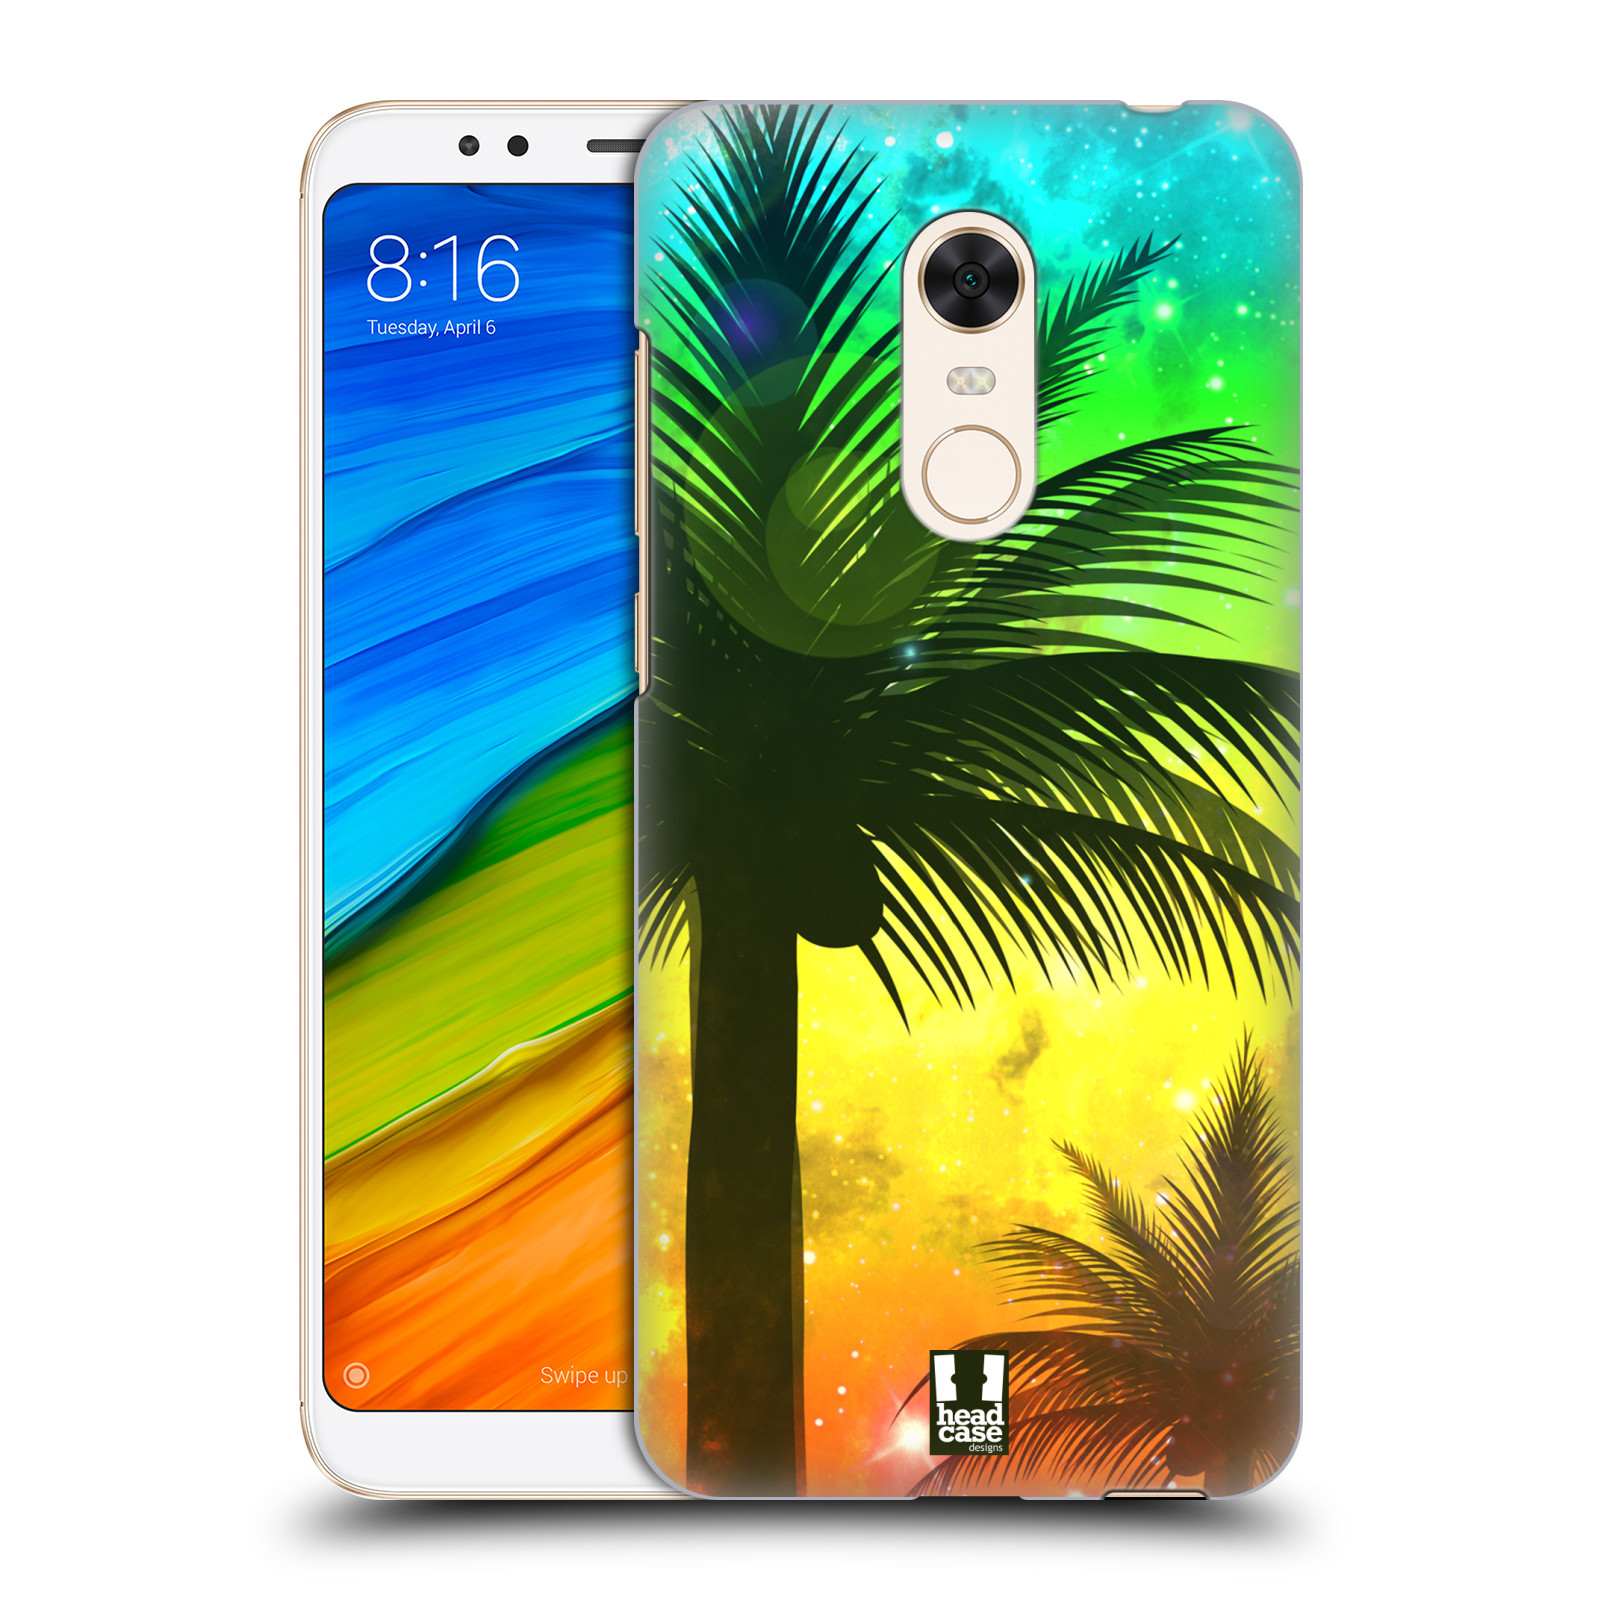 HEAD CASE plastový obal na mobil Xiaomi Redmi 5 PLUS vzor Kreslený motiv silueta moře a palmy ZELENÁ A ORANŽOVÁ